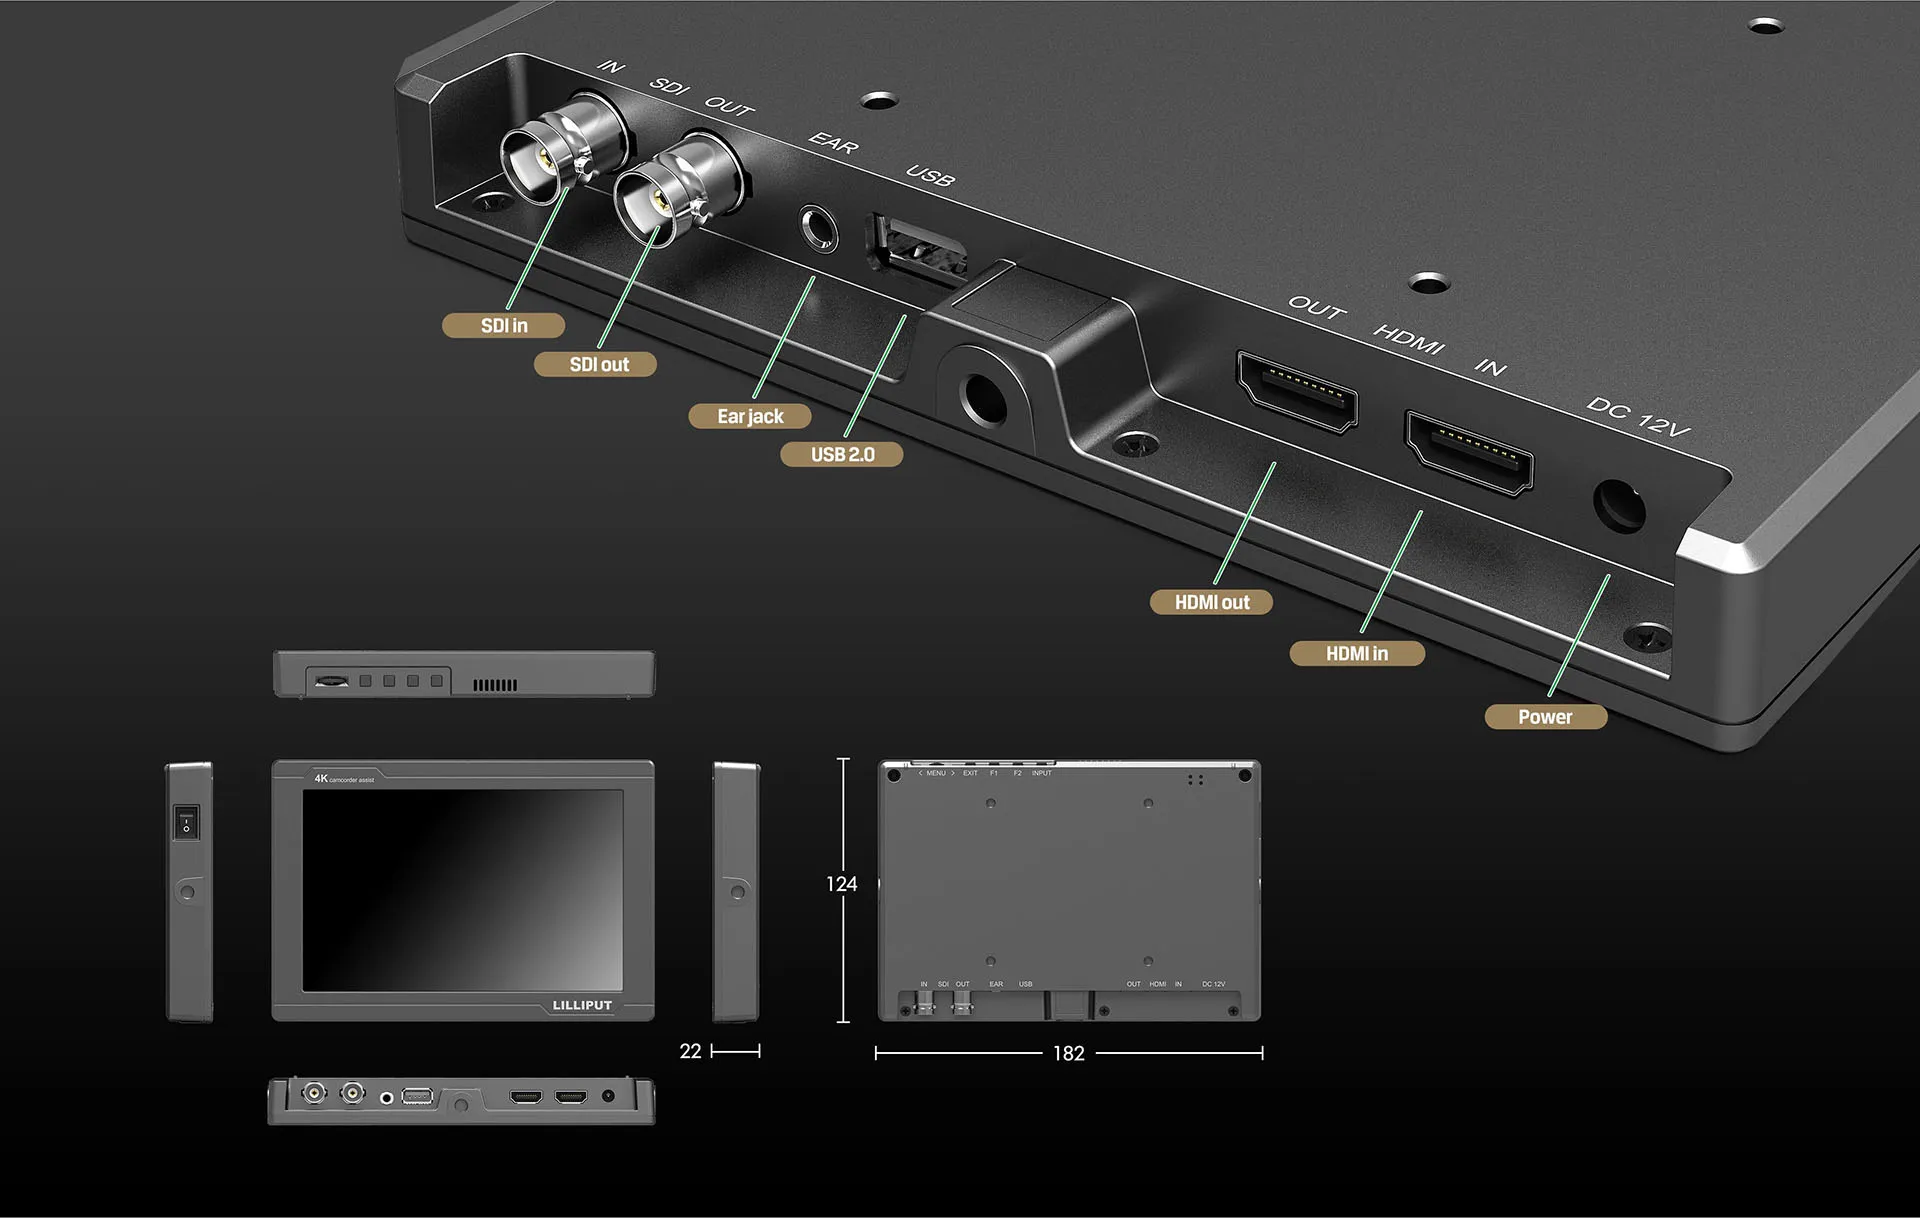 Lilliput FS7 - 7 inch 4K Camera-top monitor